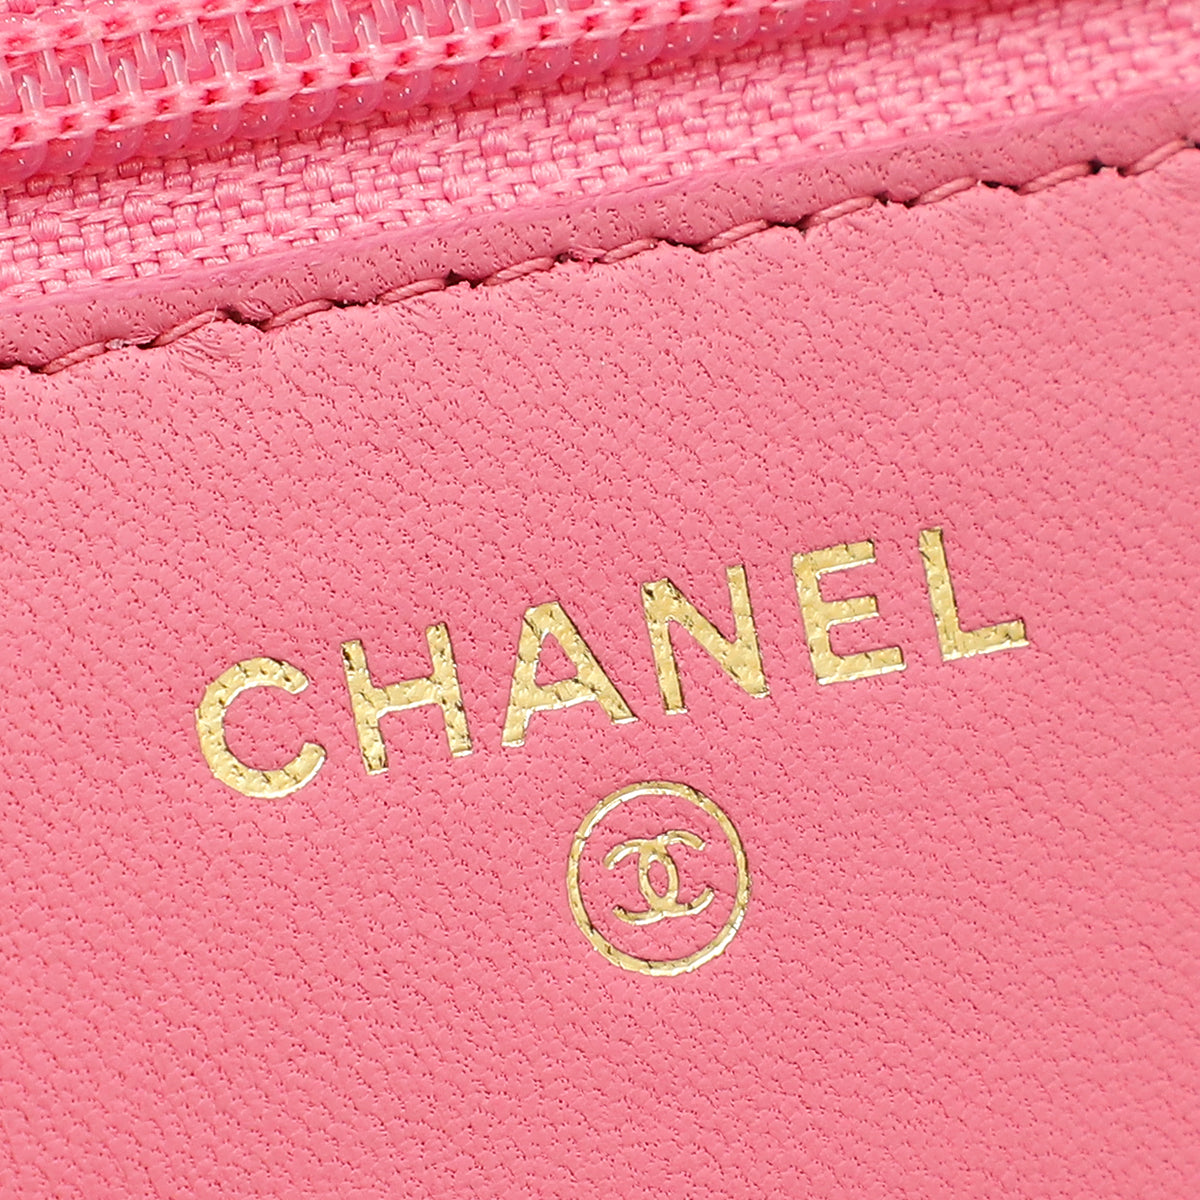 Chanel Pink Python Boy Wallet on Chain